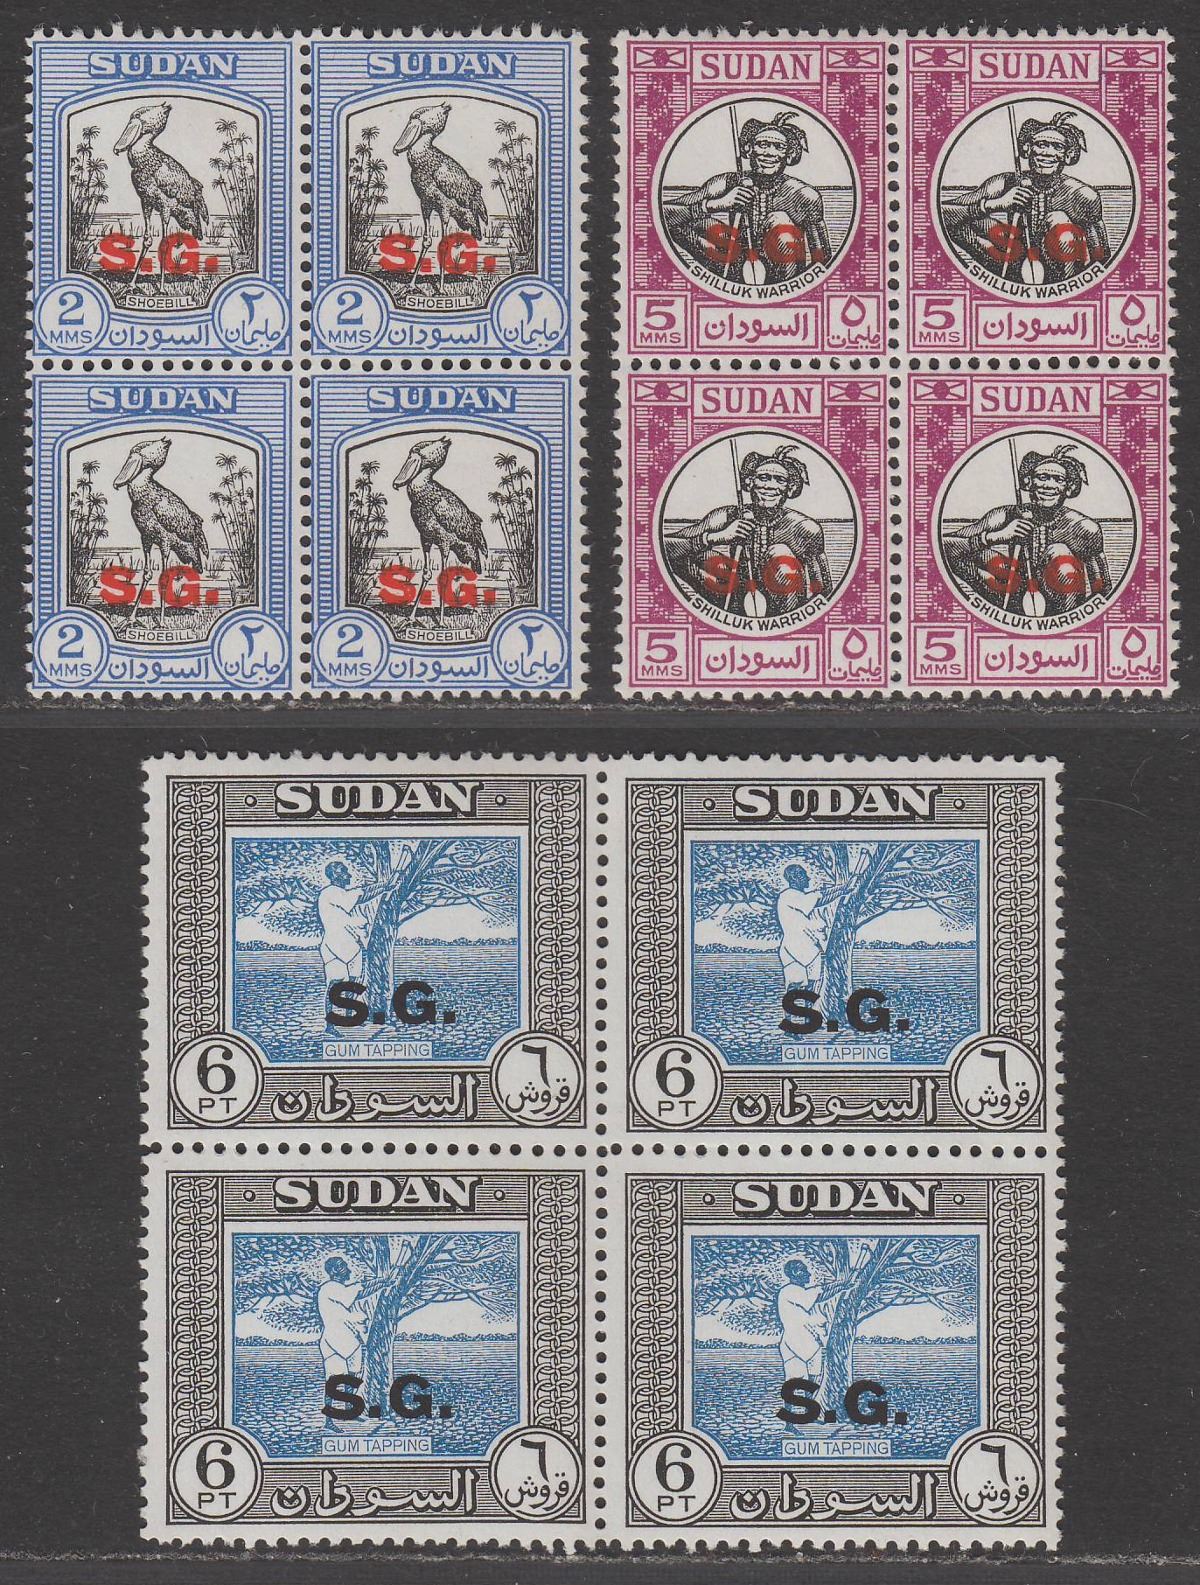 Sudan 1951 KGVI Official SG Overprint 2m, 5m, 6p Blocks of 4 Mint